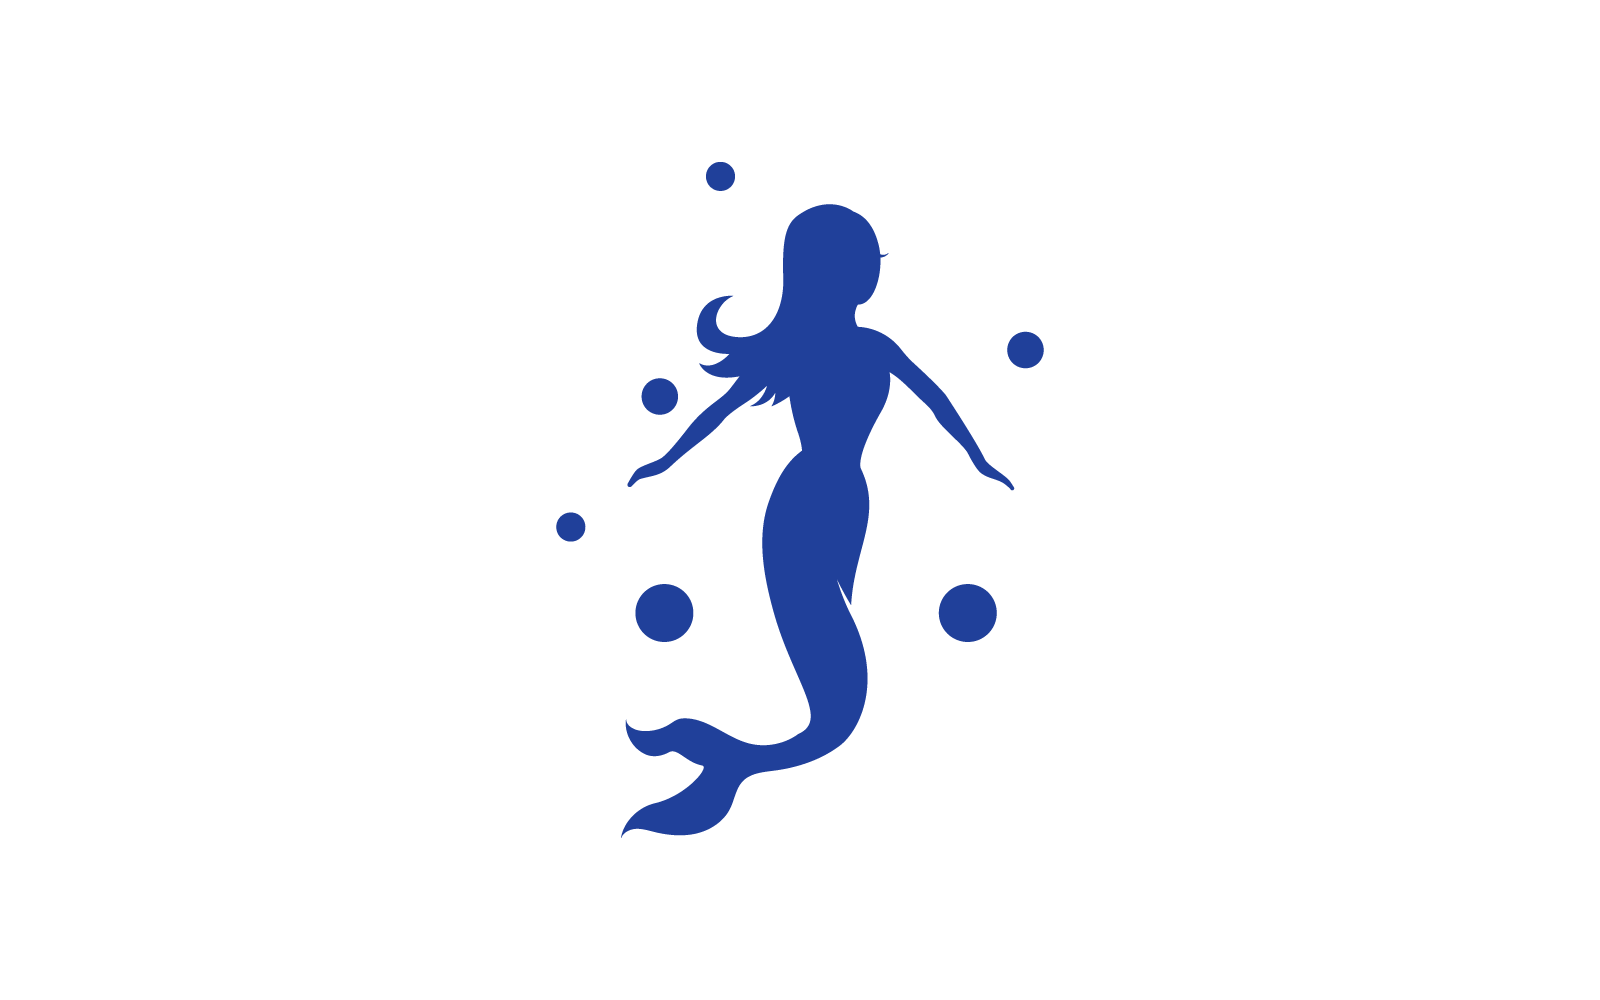 Mermaid illustration logo vector template design